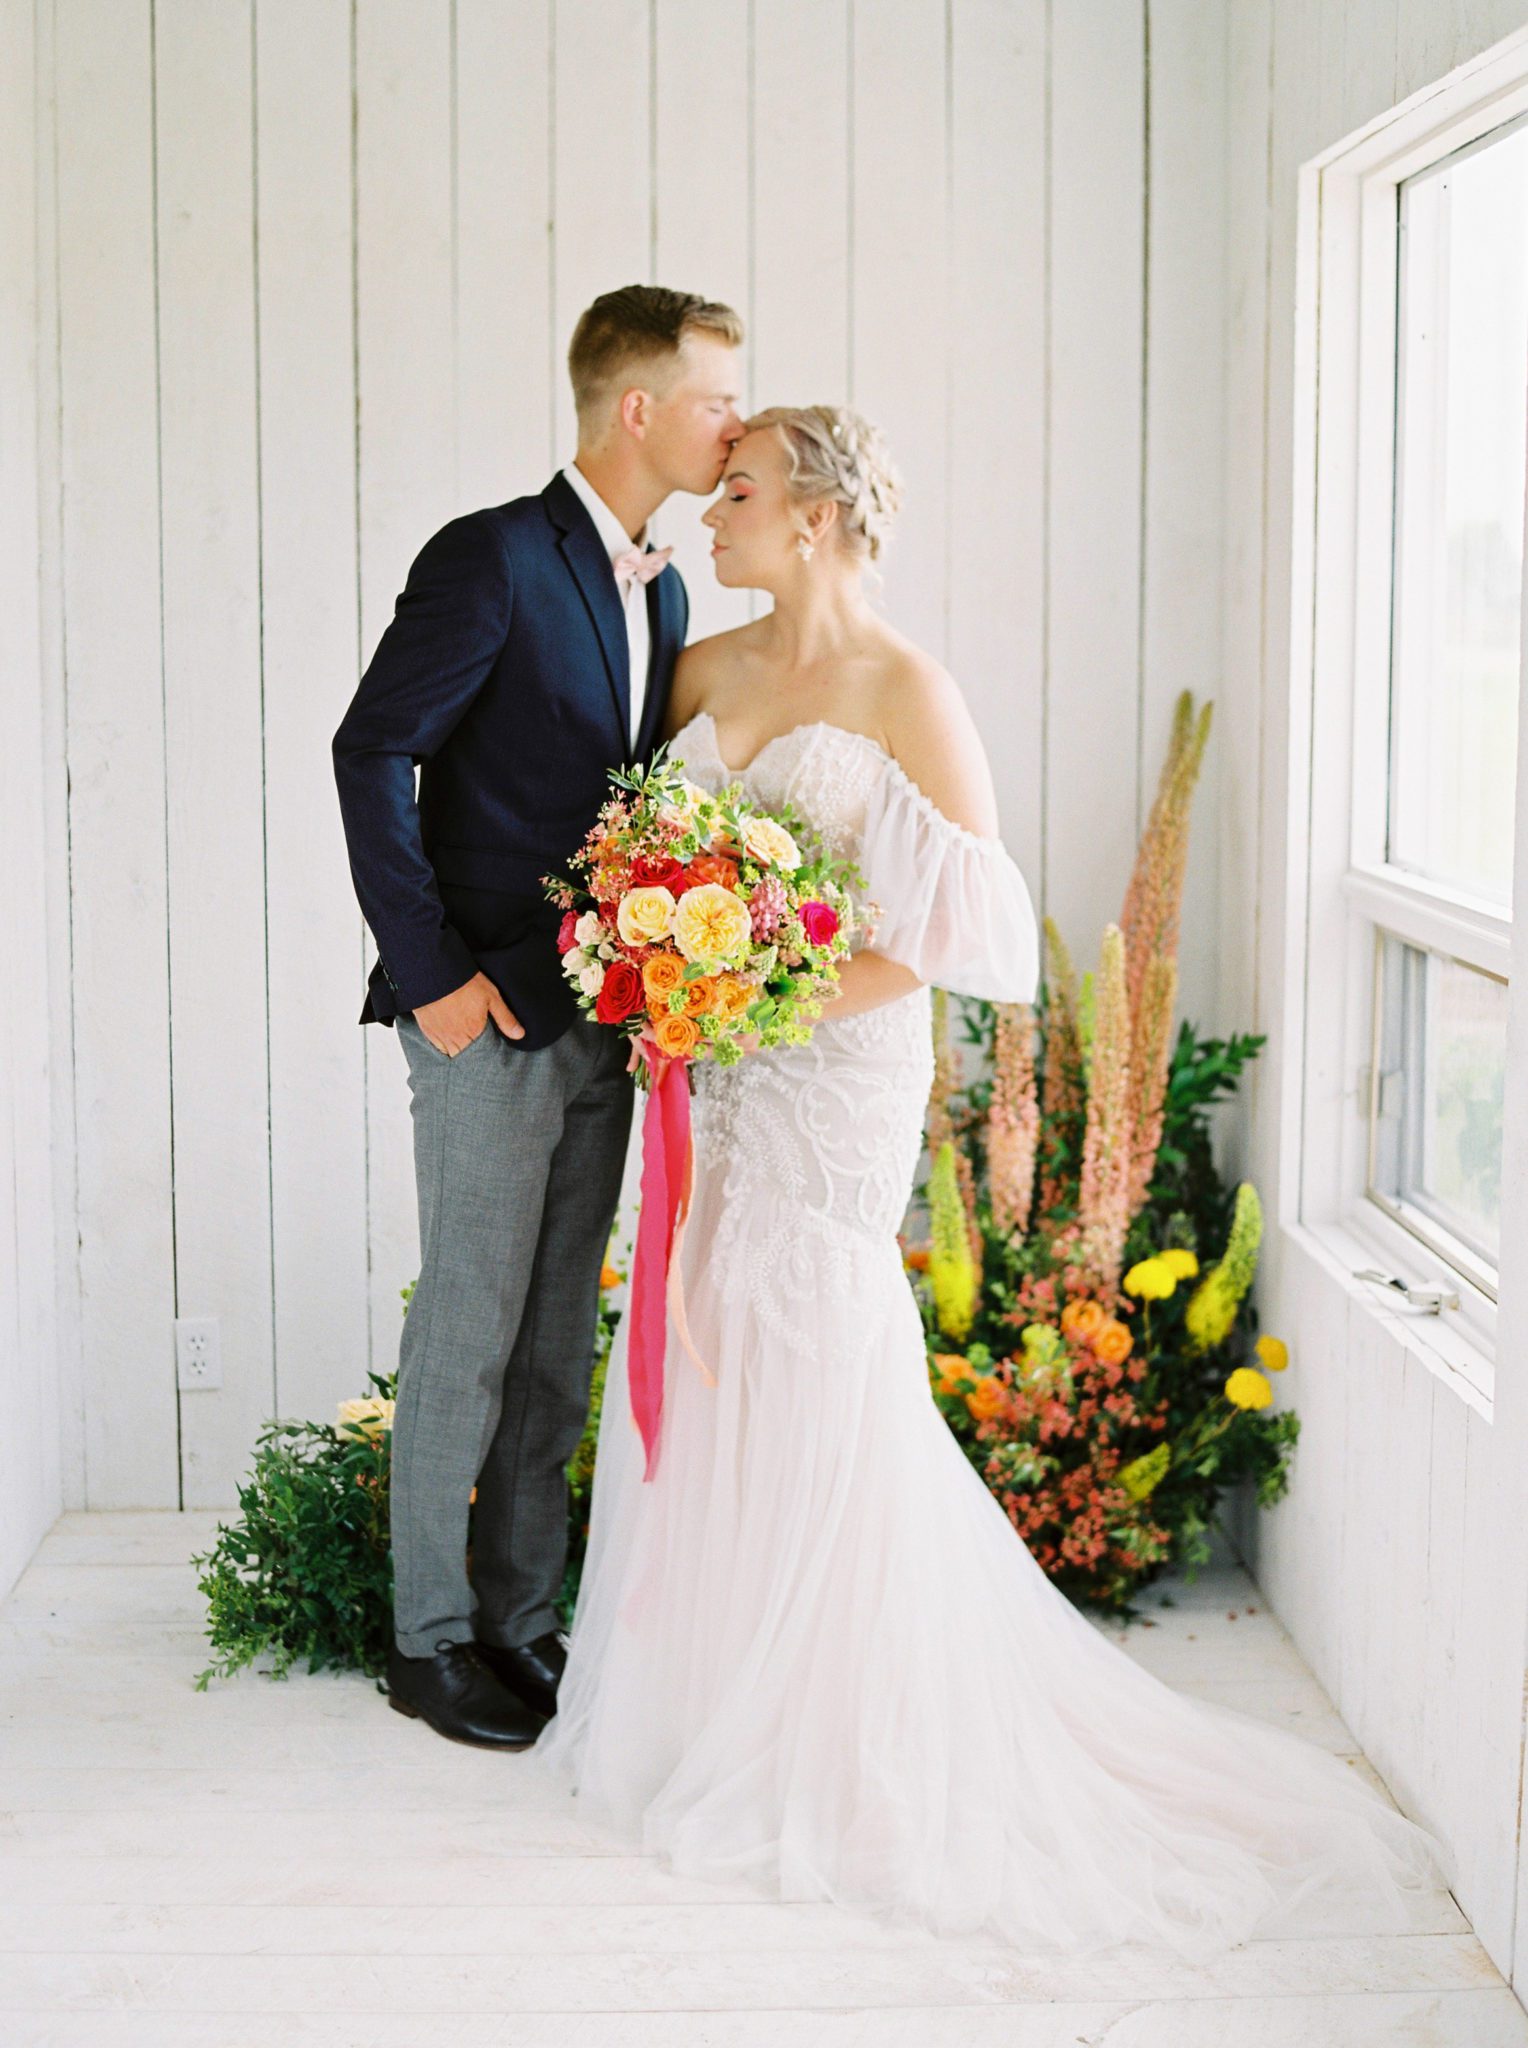 Farmhouse Chic: A Vibrant Wedding Inspiration Shoot at the Gathered | Brontë Bride Blog